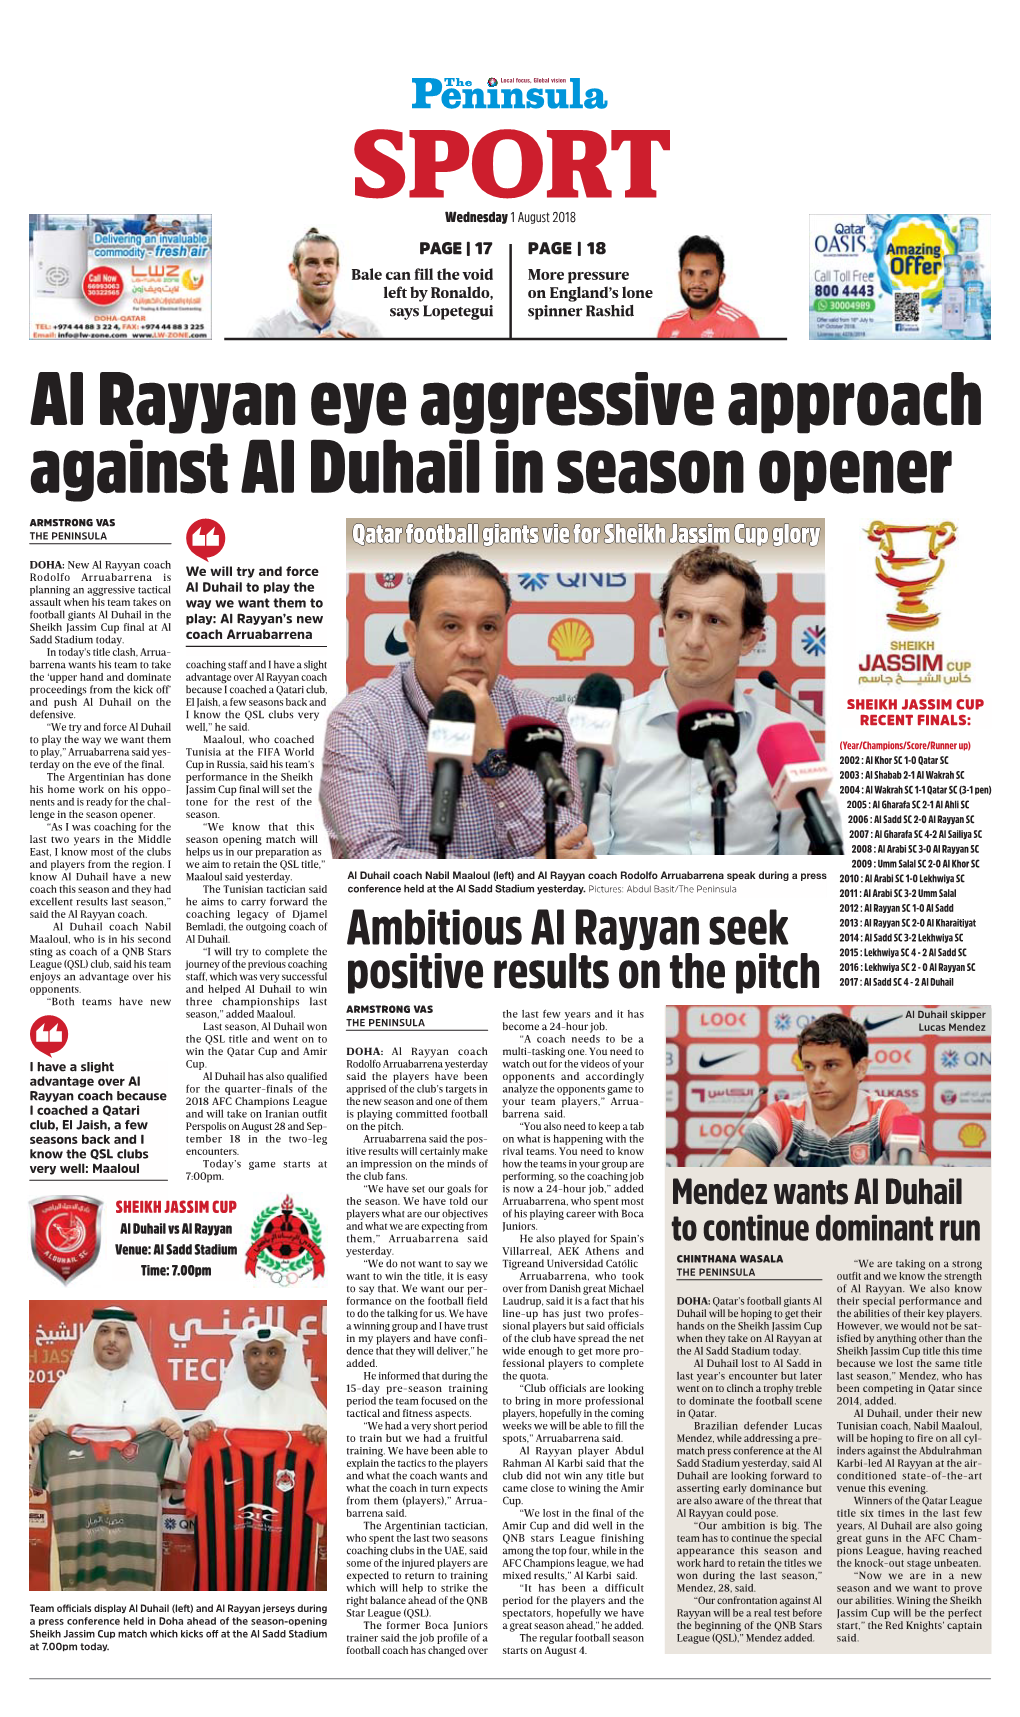 Al Rayyan Eye Aggressive Approach Against Al Duhail in Season Opener